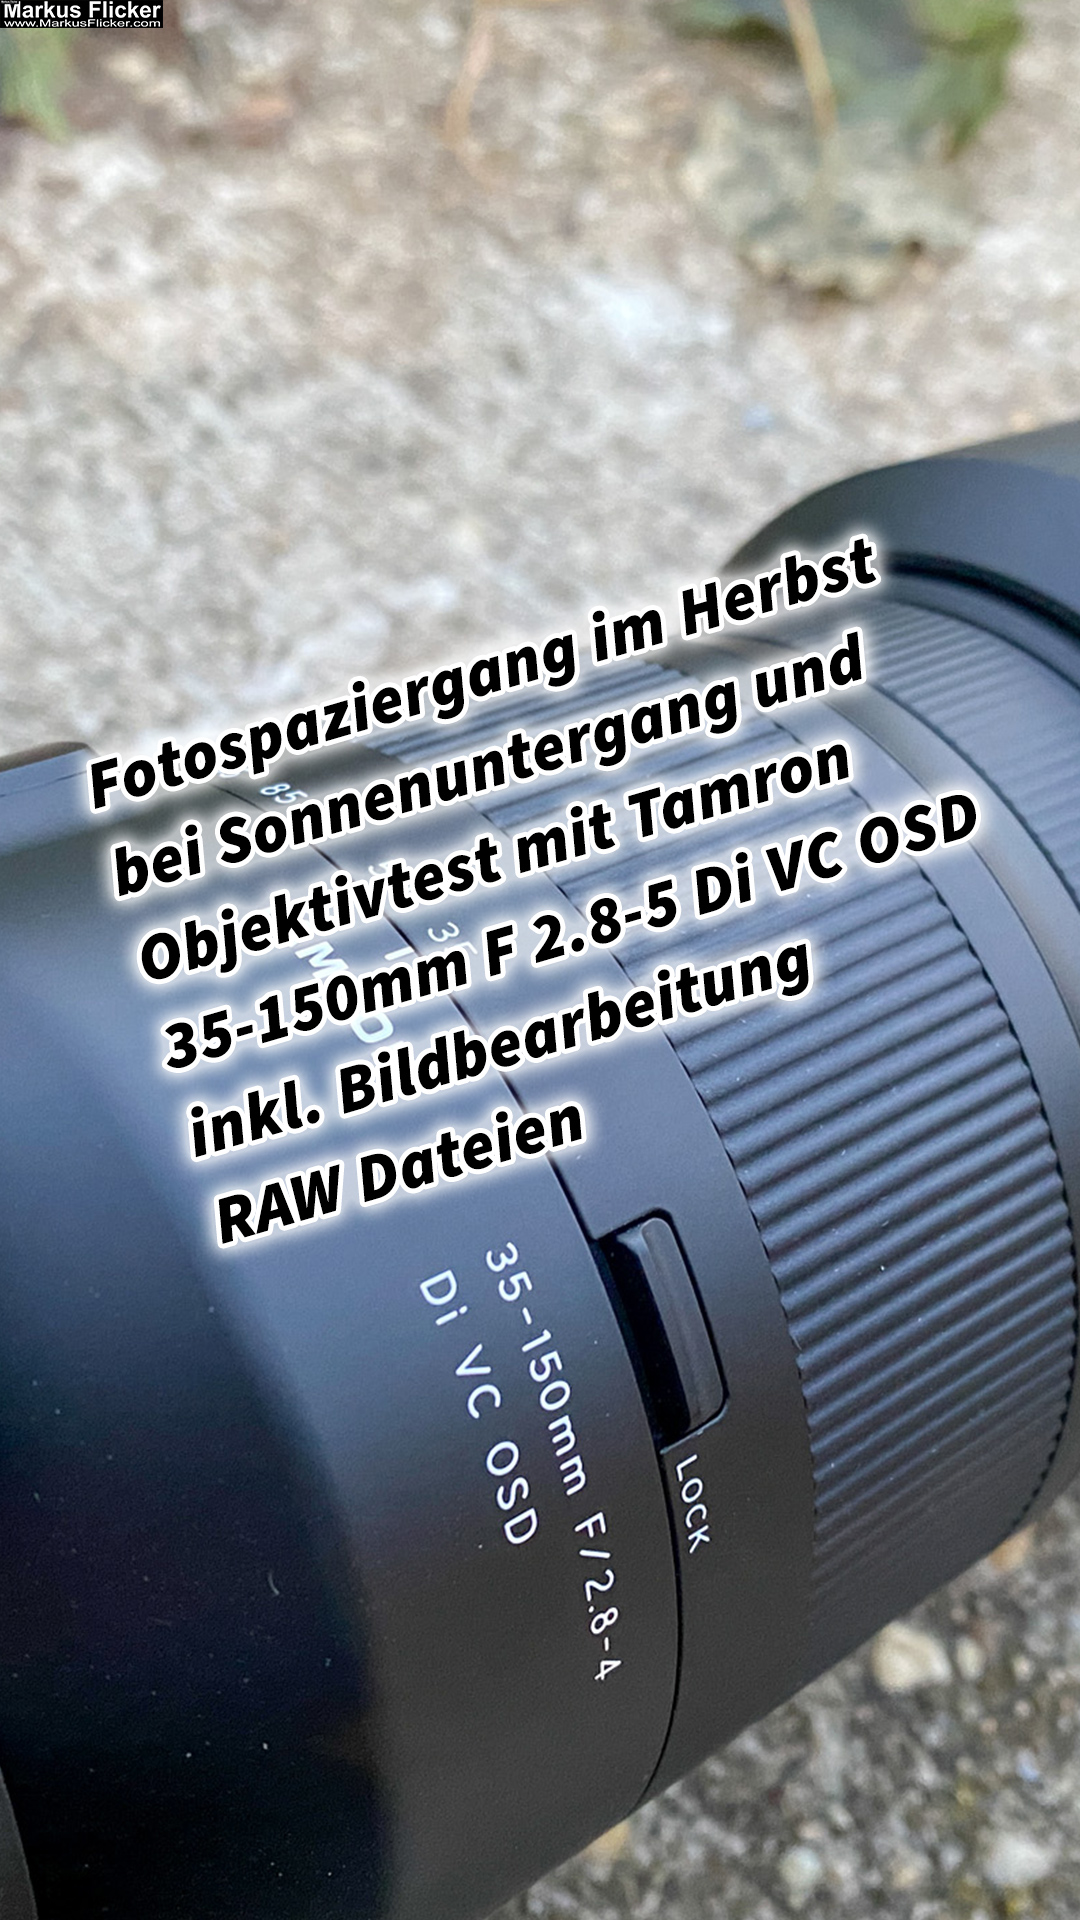 Fotospaziergang im Herbst bei Sonnenuntergang und Objektivtest mit Tamron 35-150mm F 2.8-5 Di VC OSD inkl. Bildbearbeitung RAW Dateien